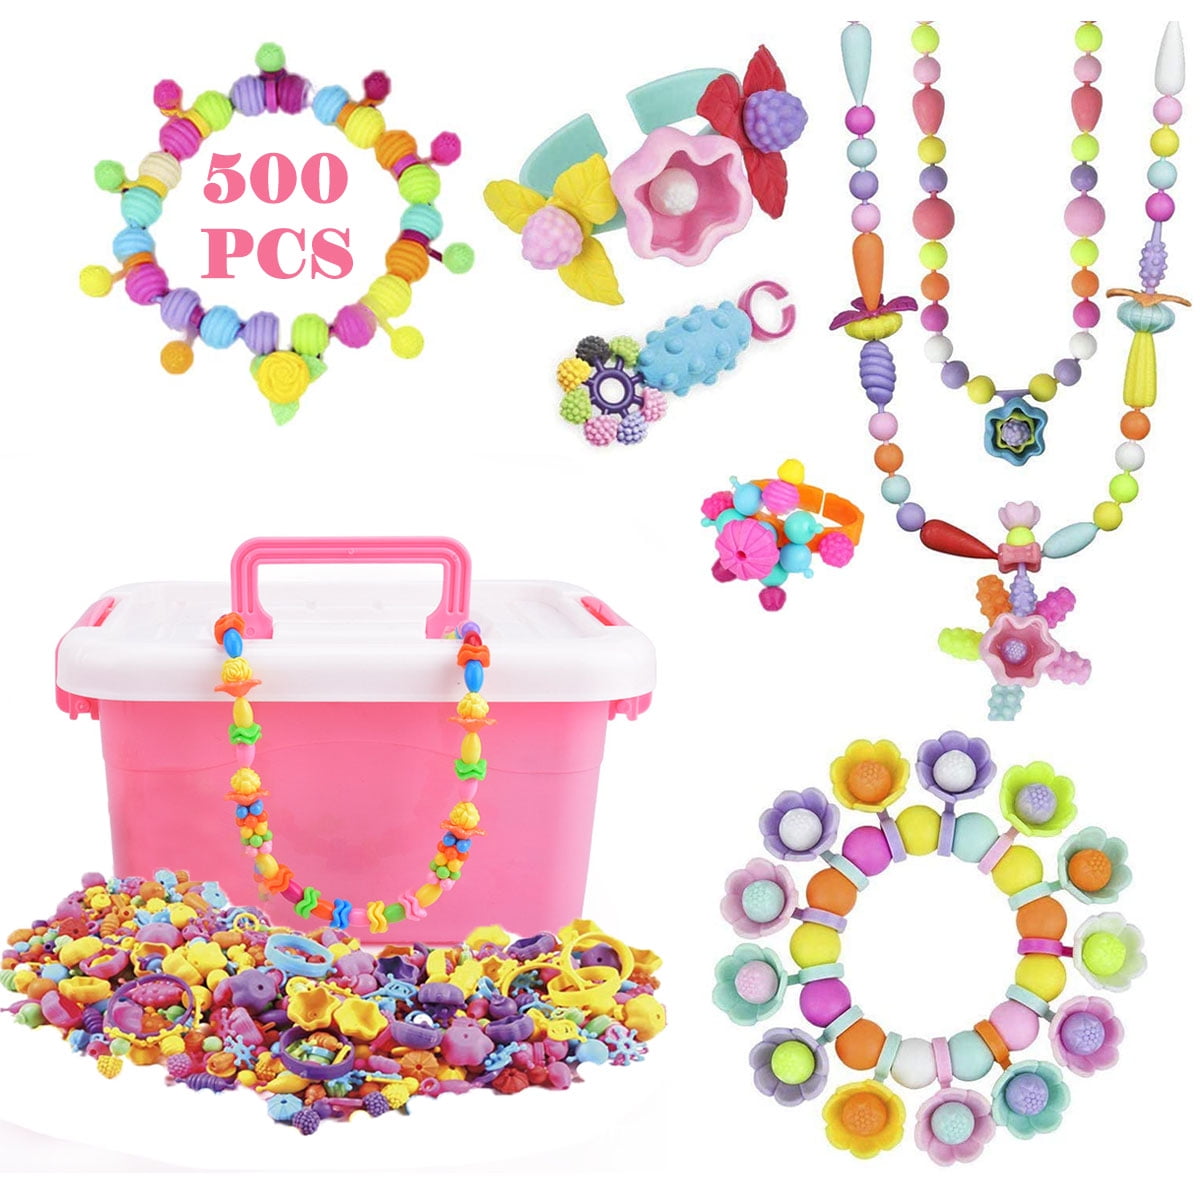 Seenda Pop Beads,500 Pcs Snap Beads for Kids Crafts DIY Jewelry